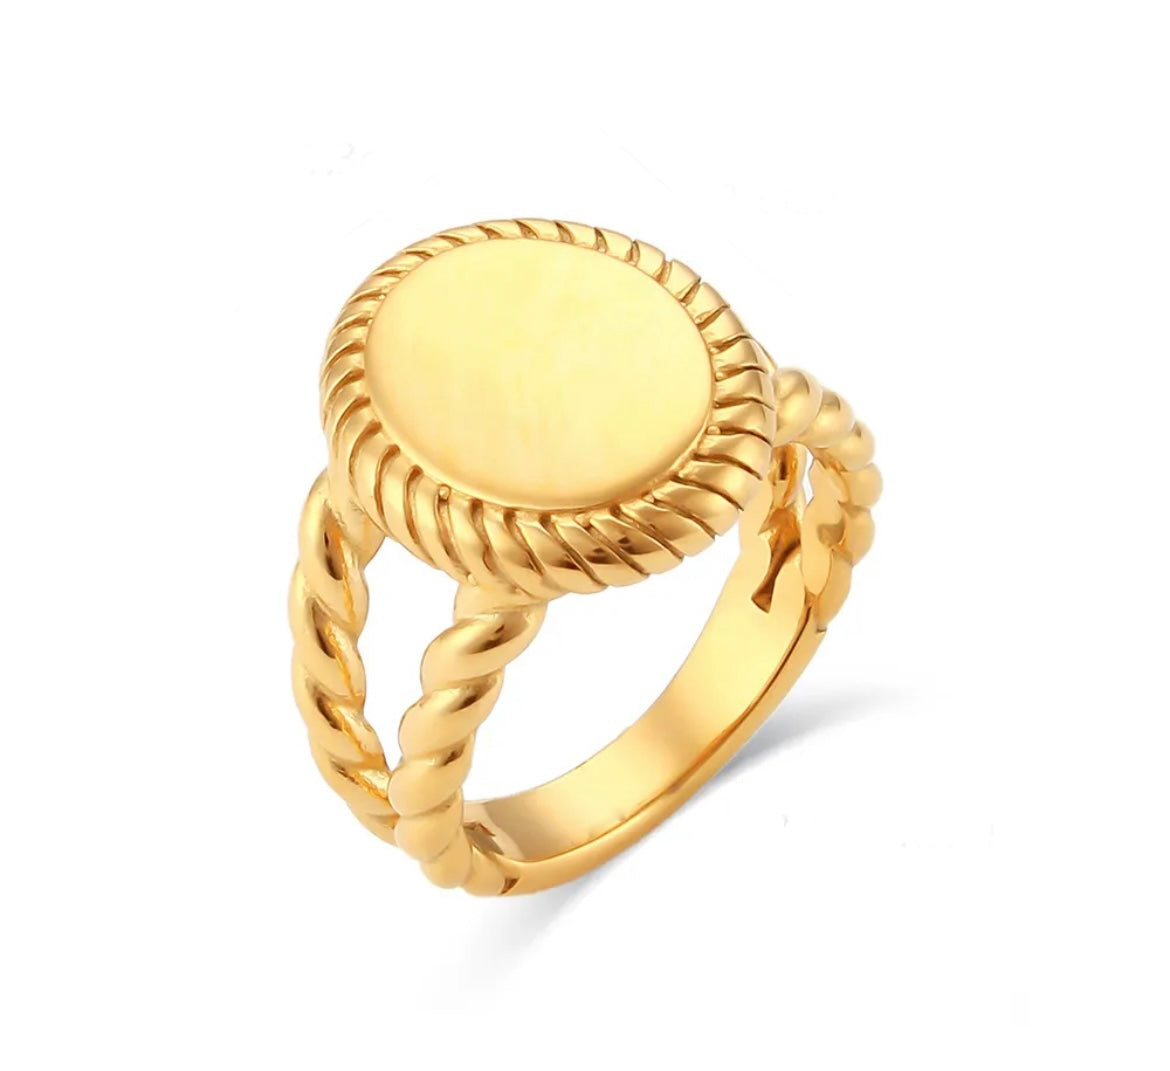 Maharaja ring